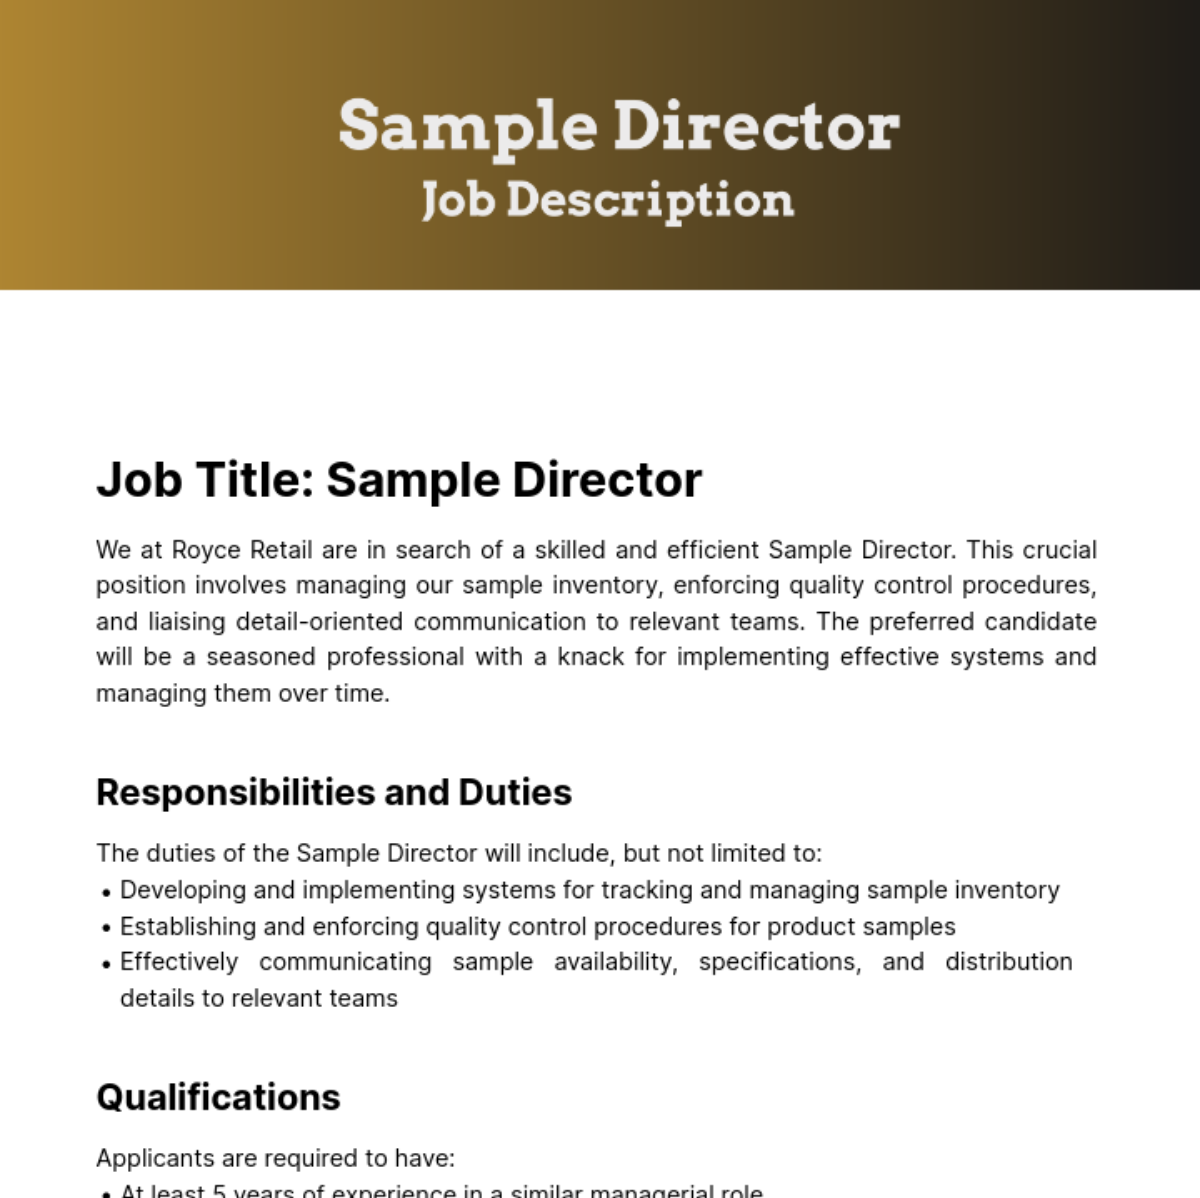 Sample Director Job Description Template